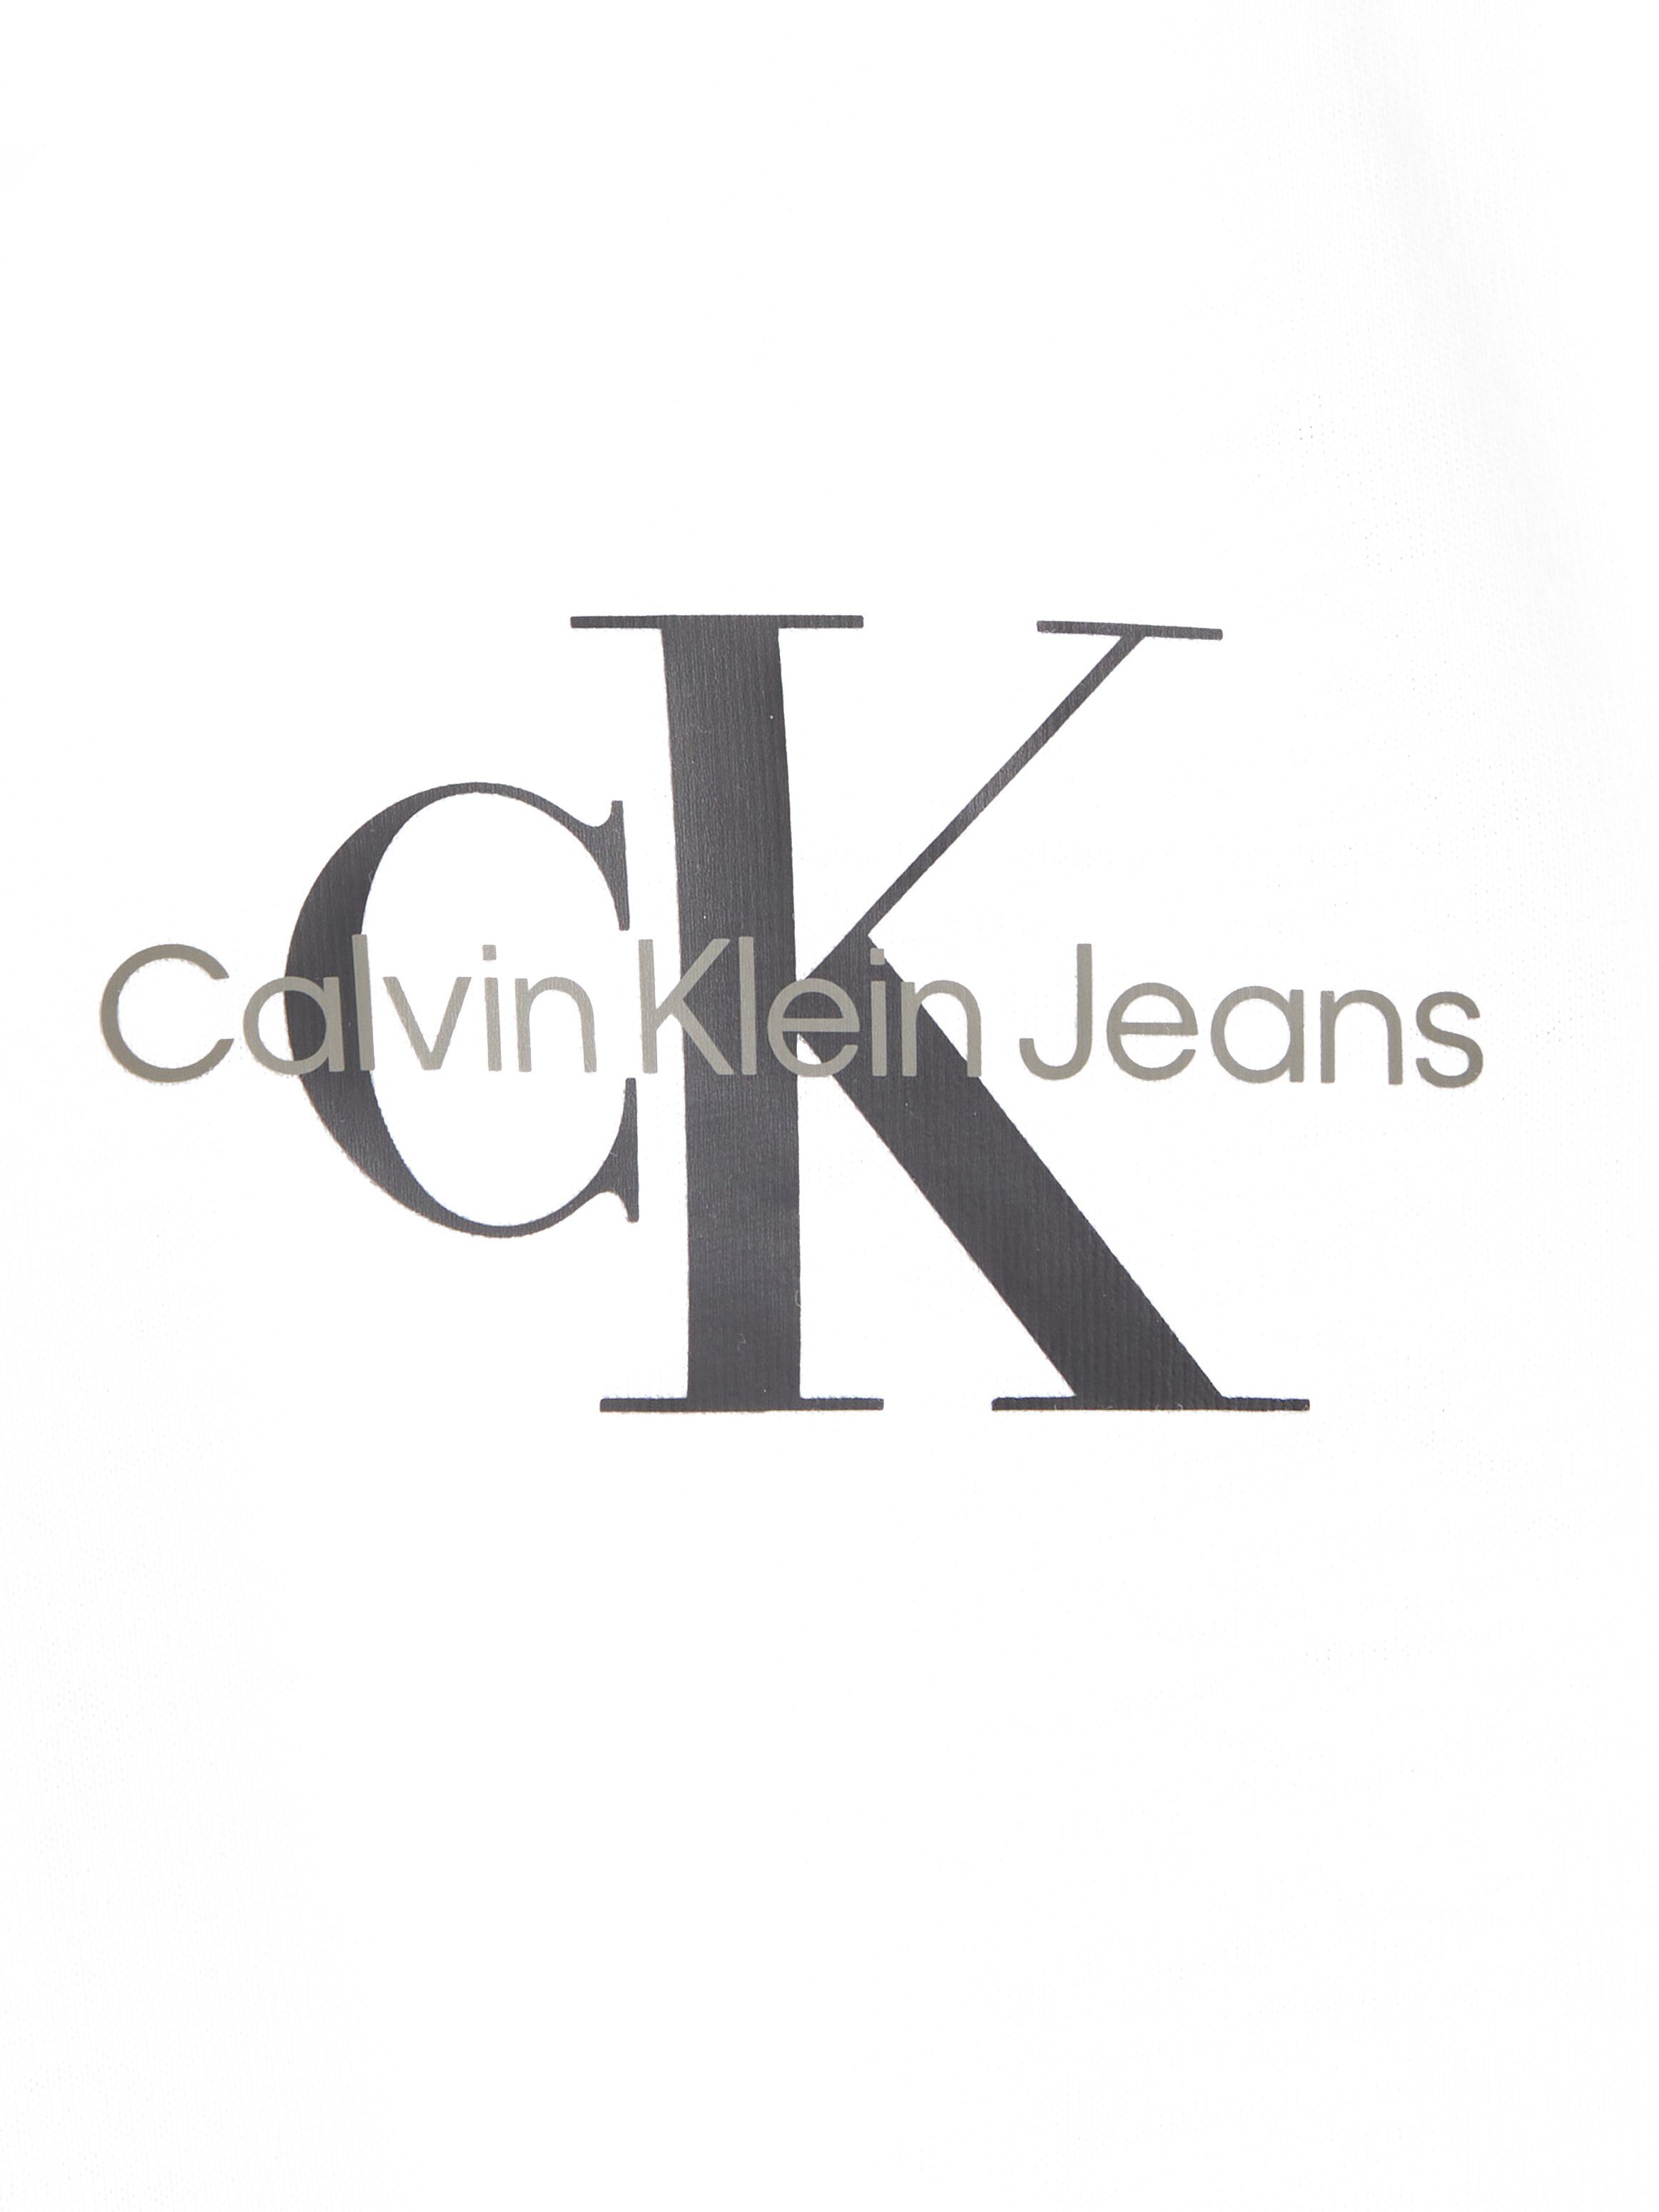 Jeans CHEST Klein TOP White T-Shirt Calvin Bright MONOGRAM